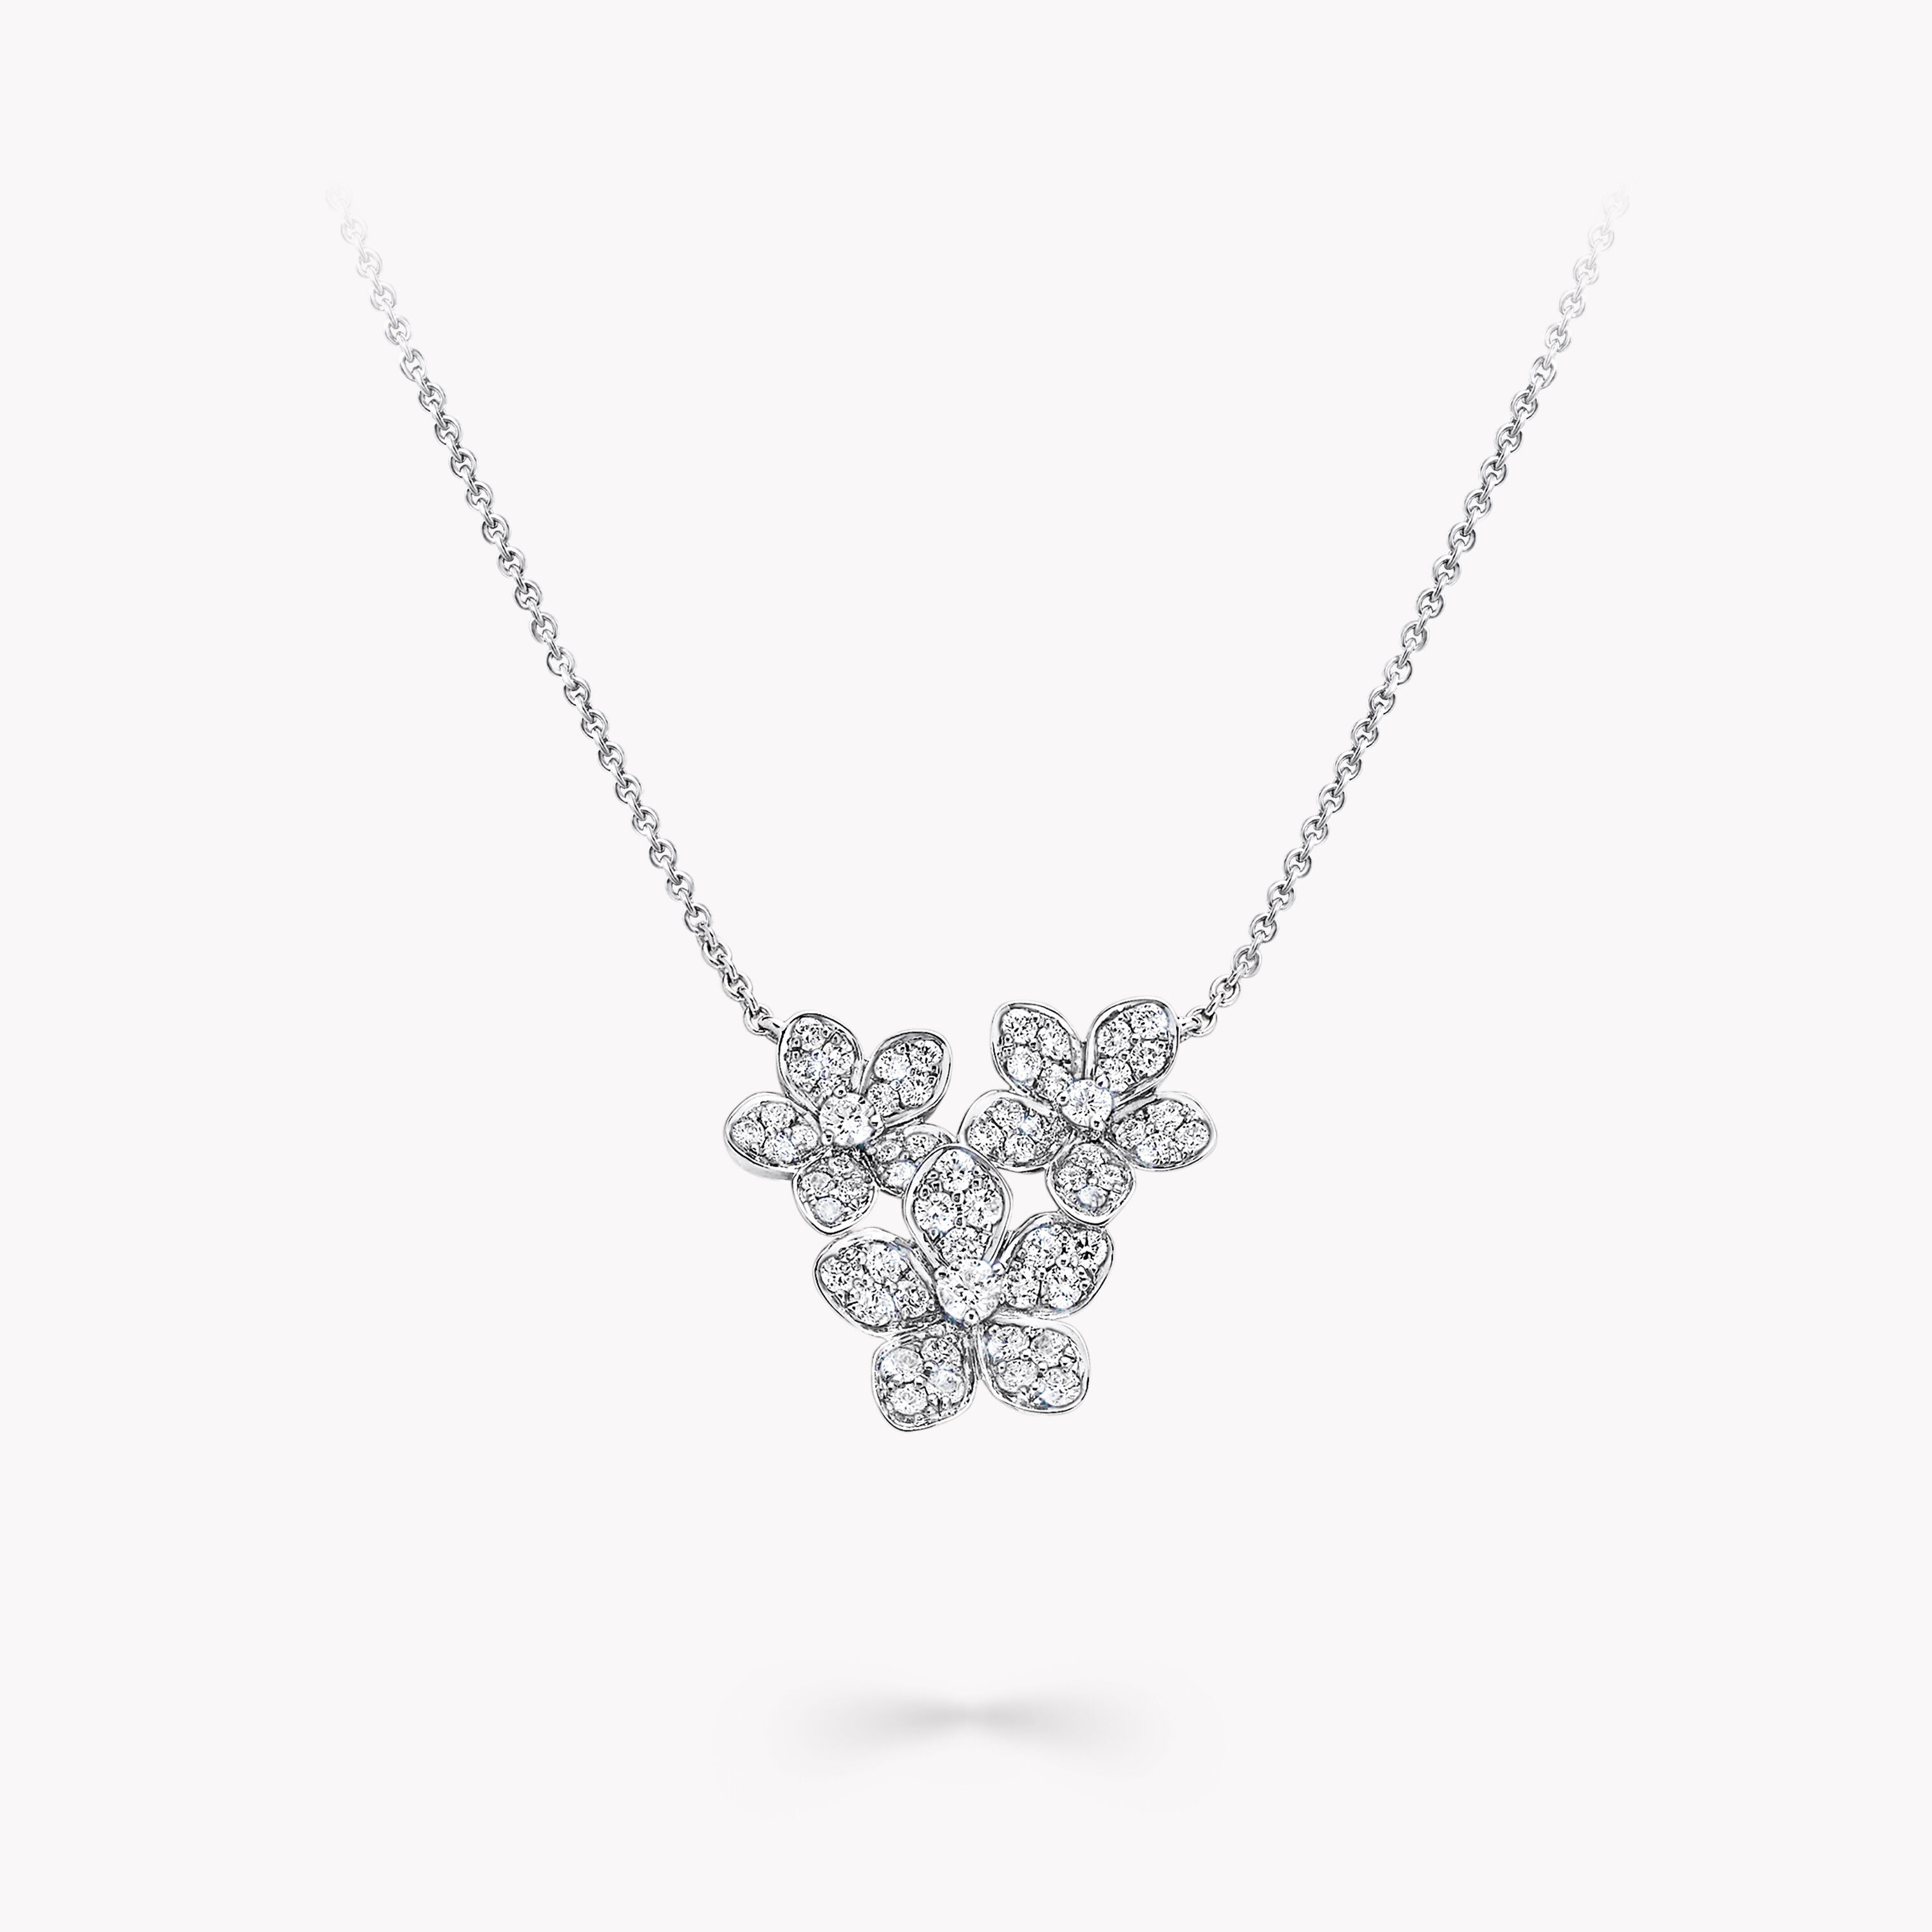 Round diamond cluster necklace | Freedman Jewelers - Freedman Jewelers